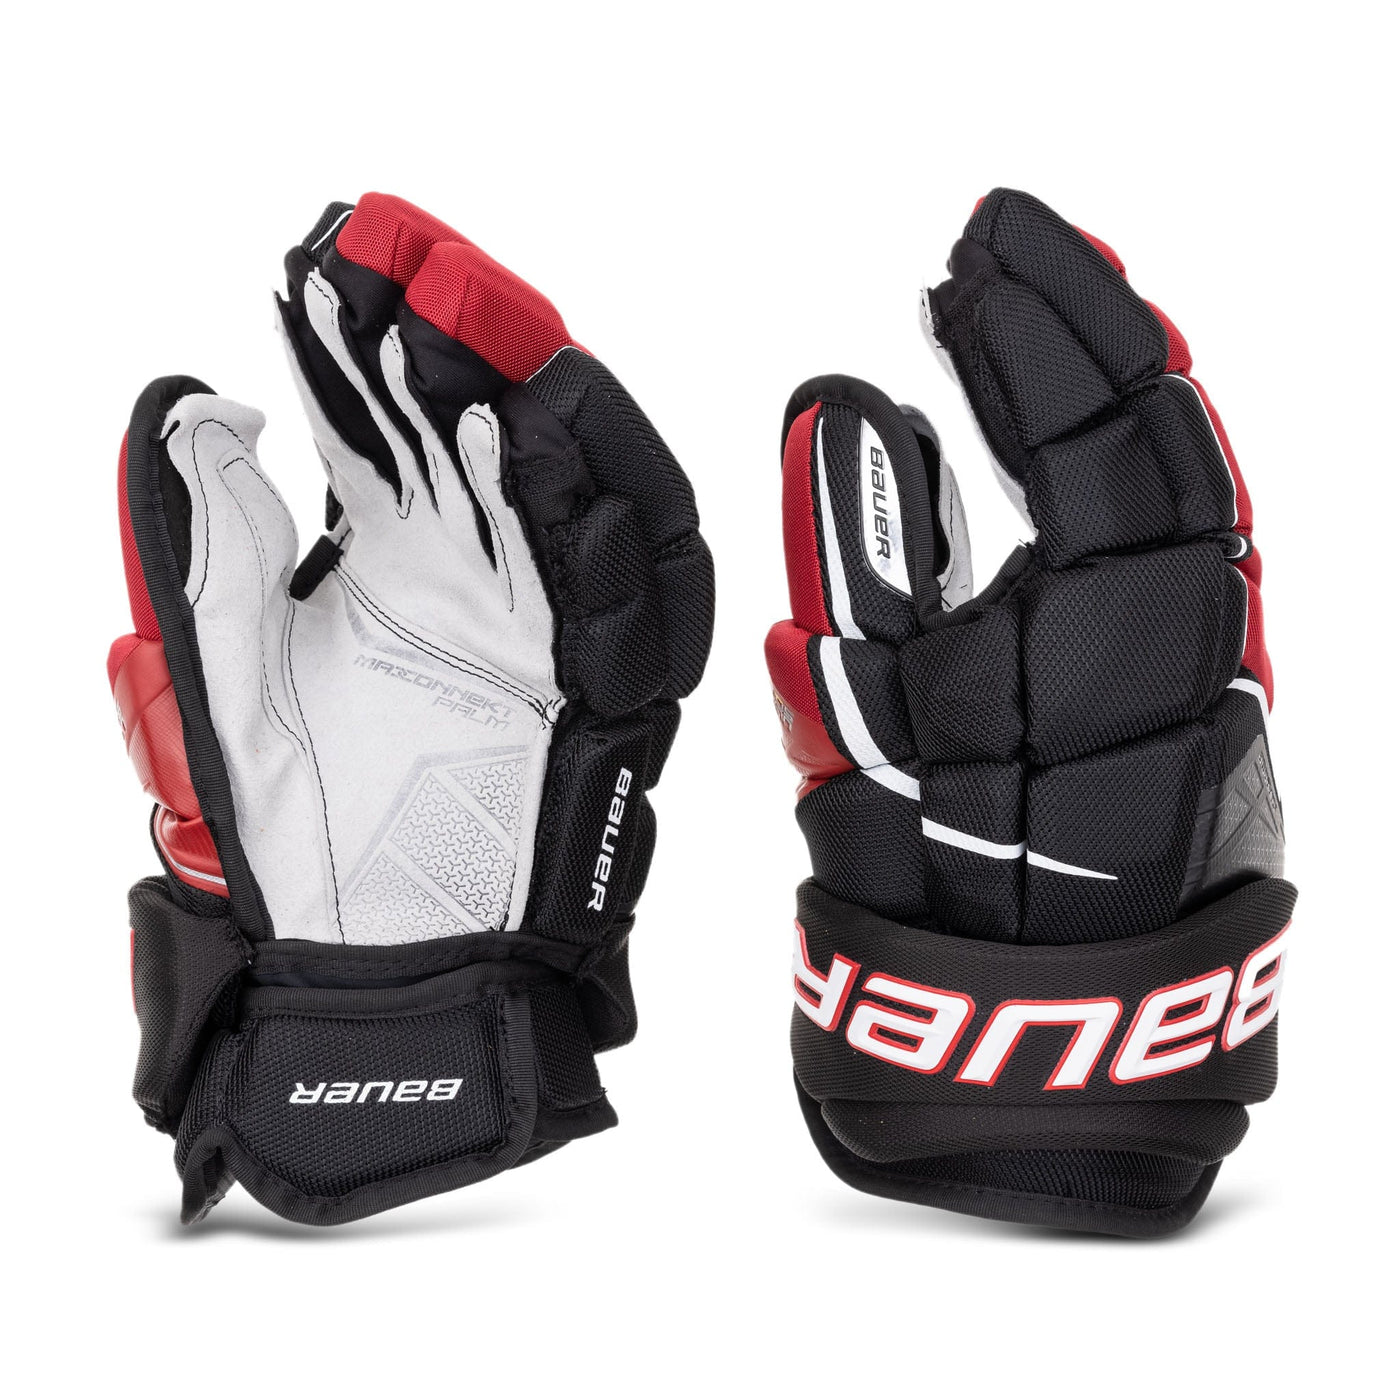 Bauer Supreme UltraSonic Senior Hockey Gloves